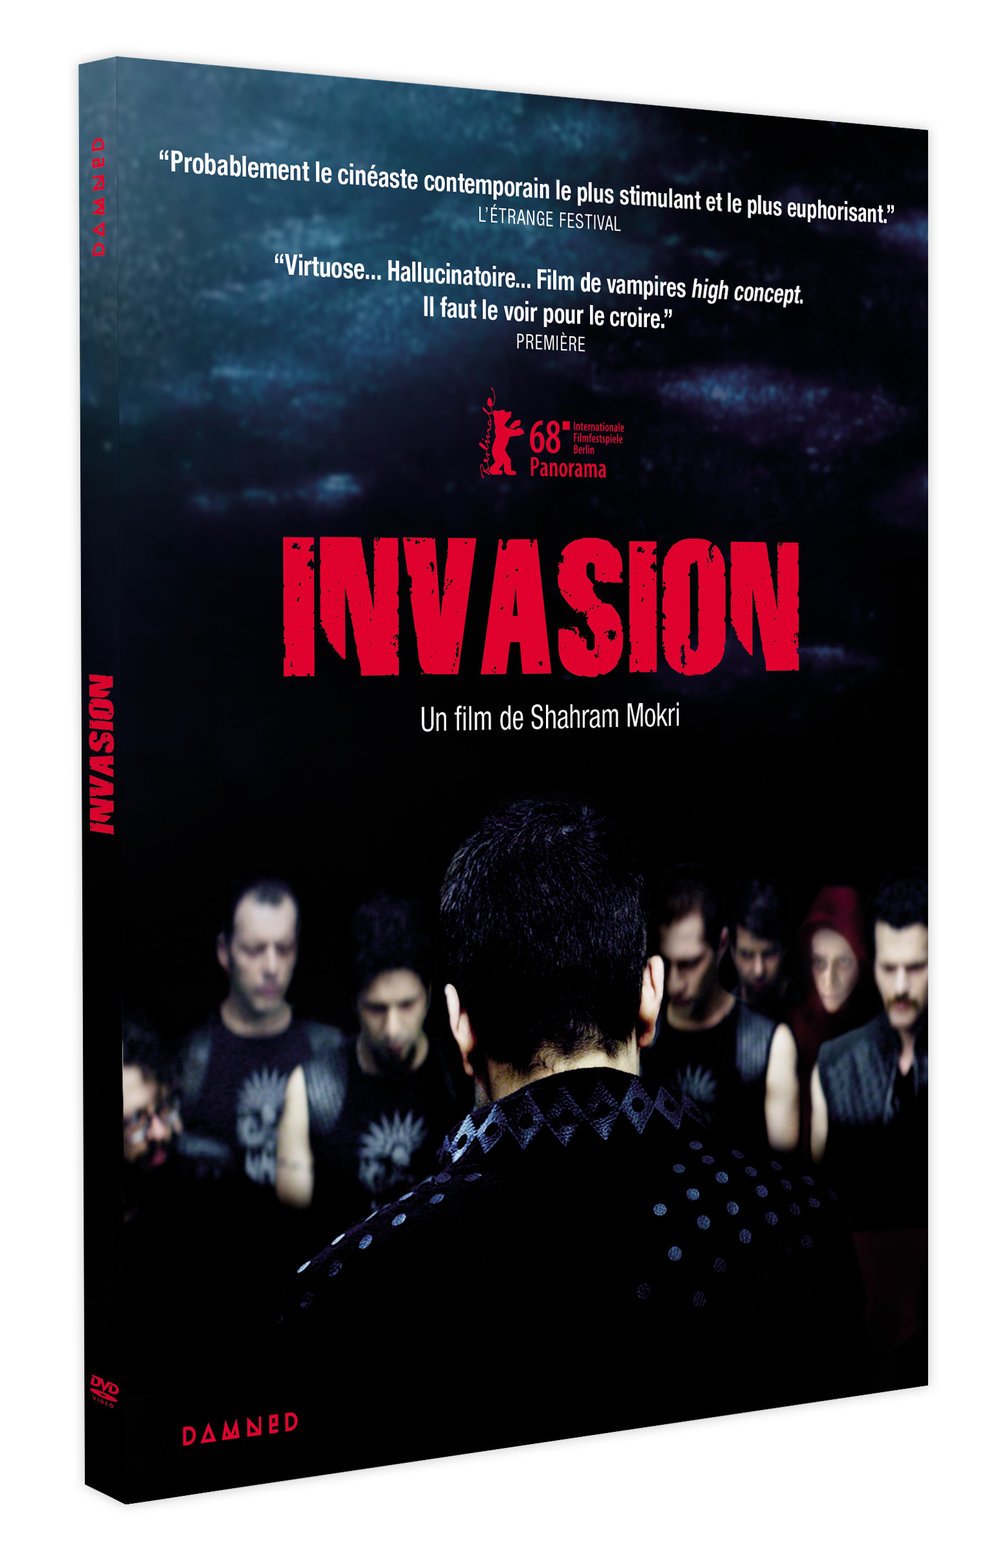 icone_dvd_invasion.jpg